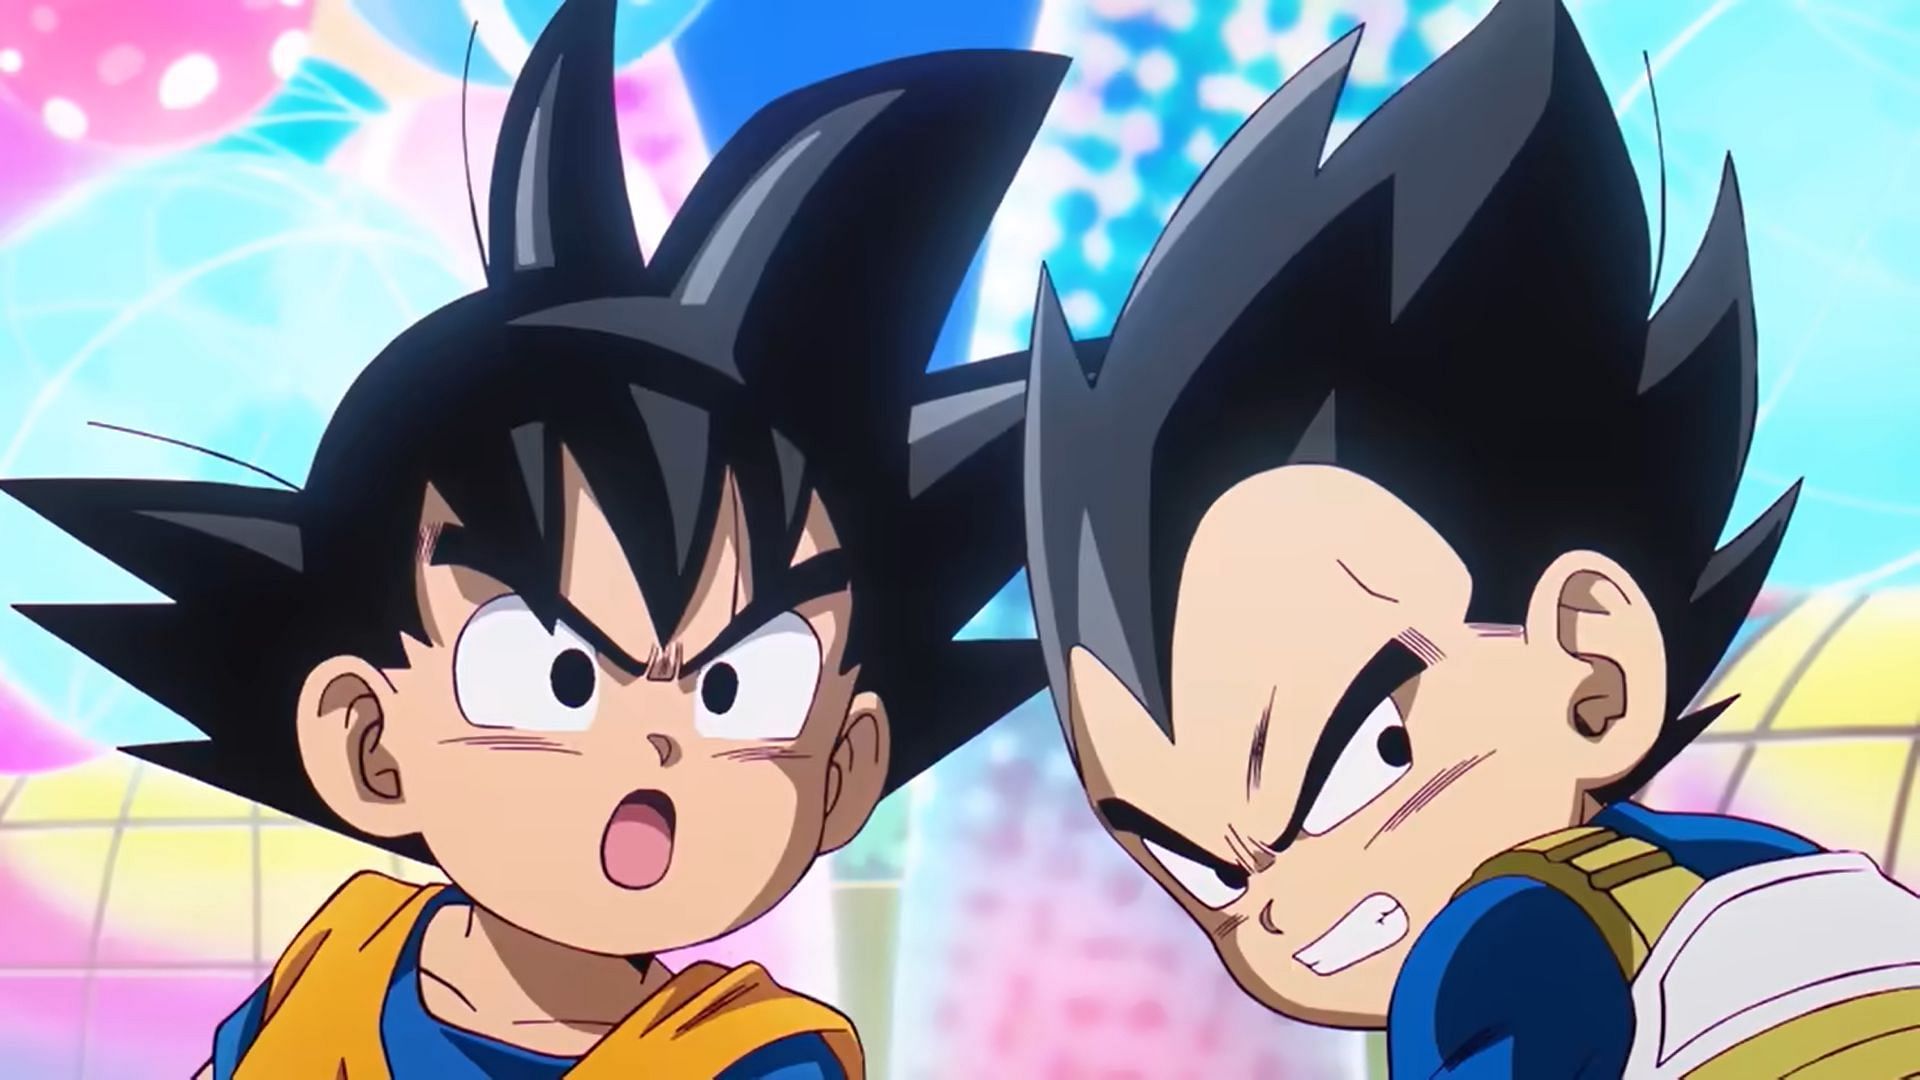 Goku and Vegeta as seen in the Dragon Ball Daima anime (Image via Toei Animation)